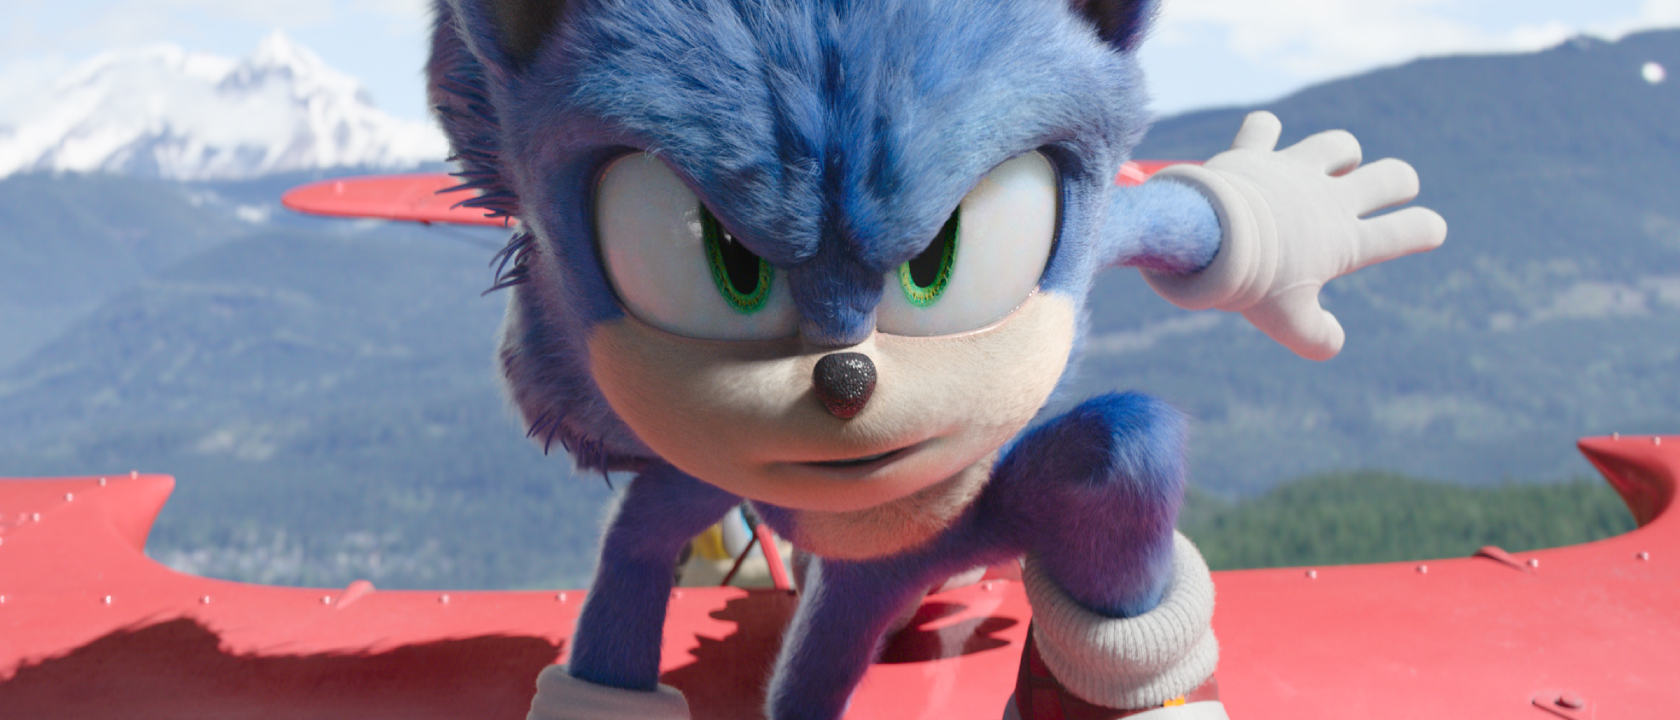 Sonic the Hedgehog 2 review – no surprises in Sega's speedy